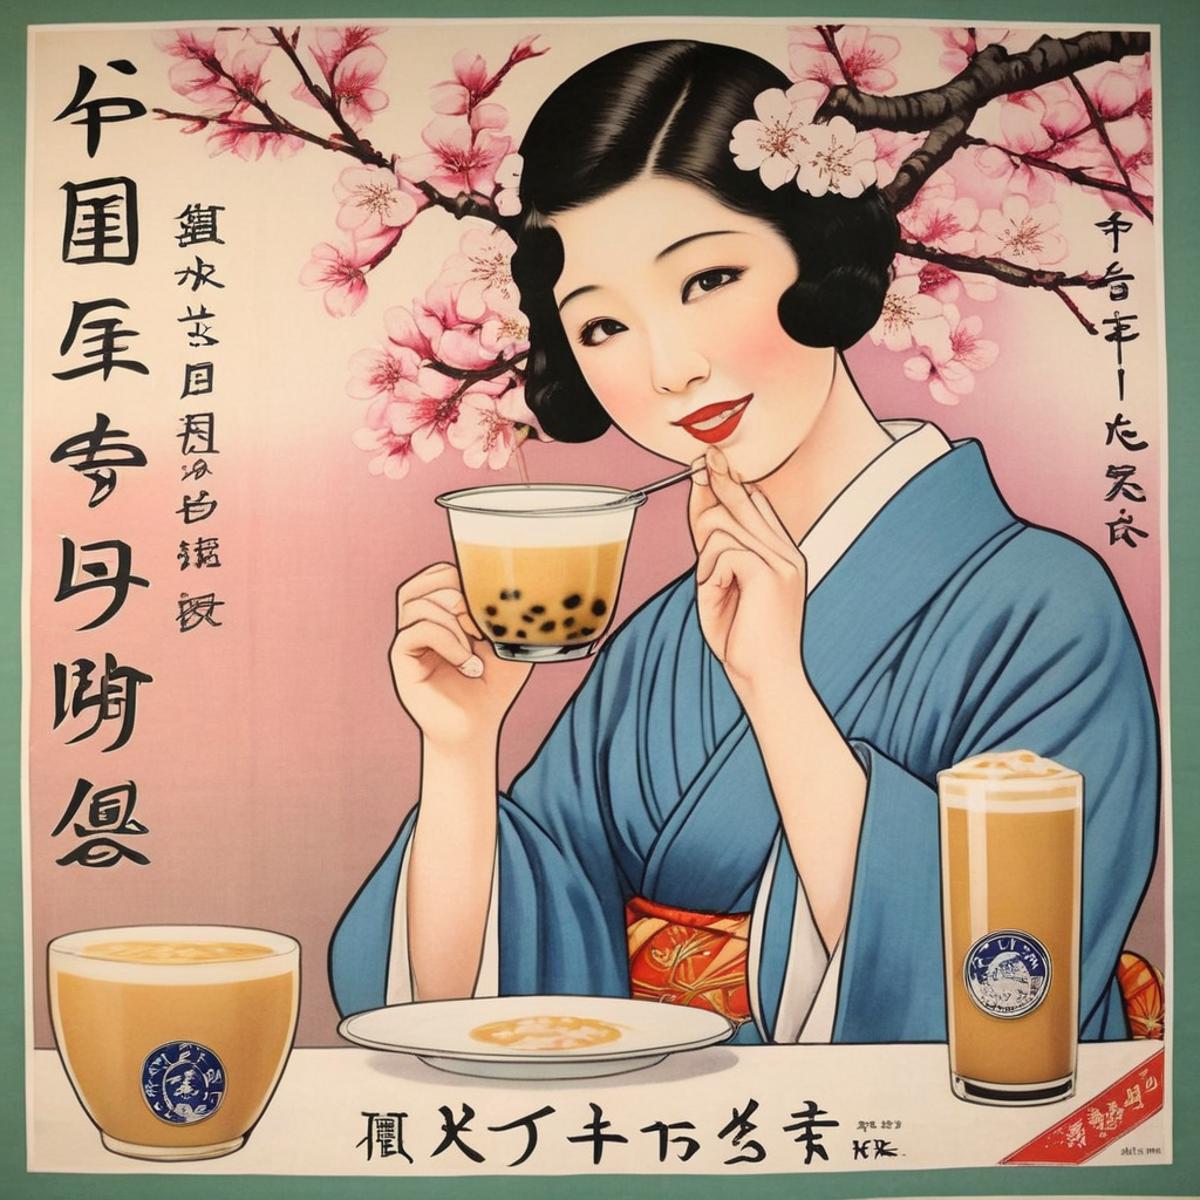 1930'S Japan Poster style image by allpleoleo439